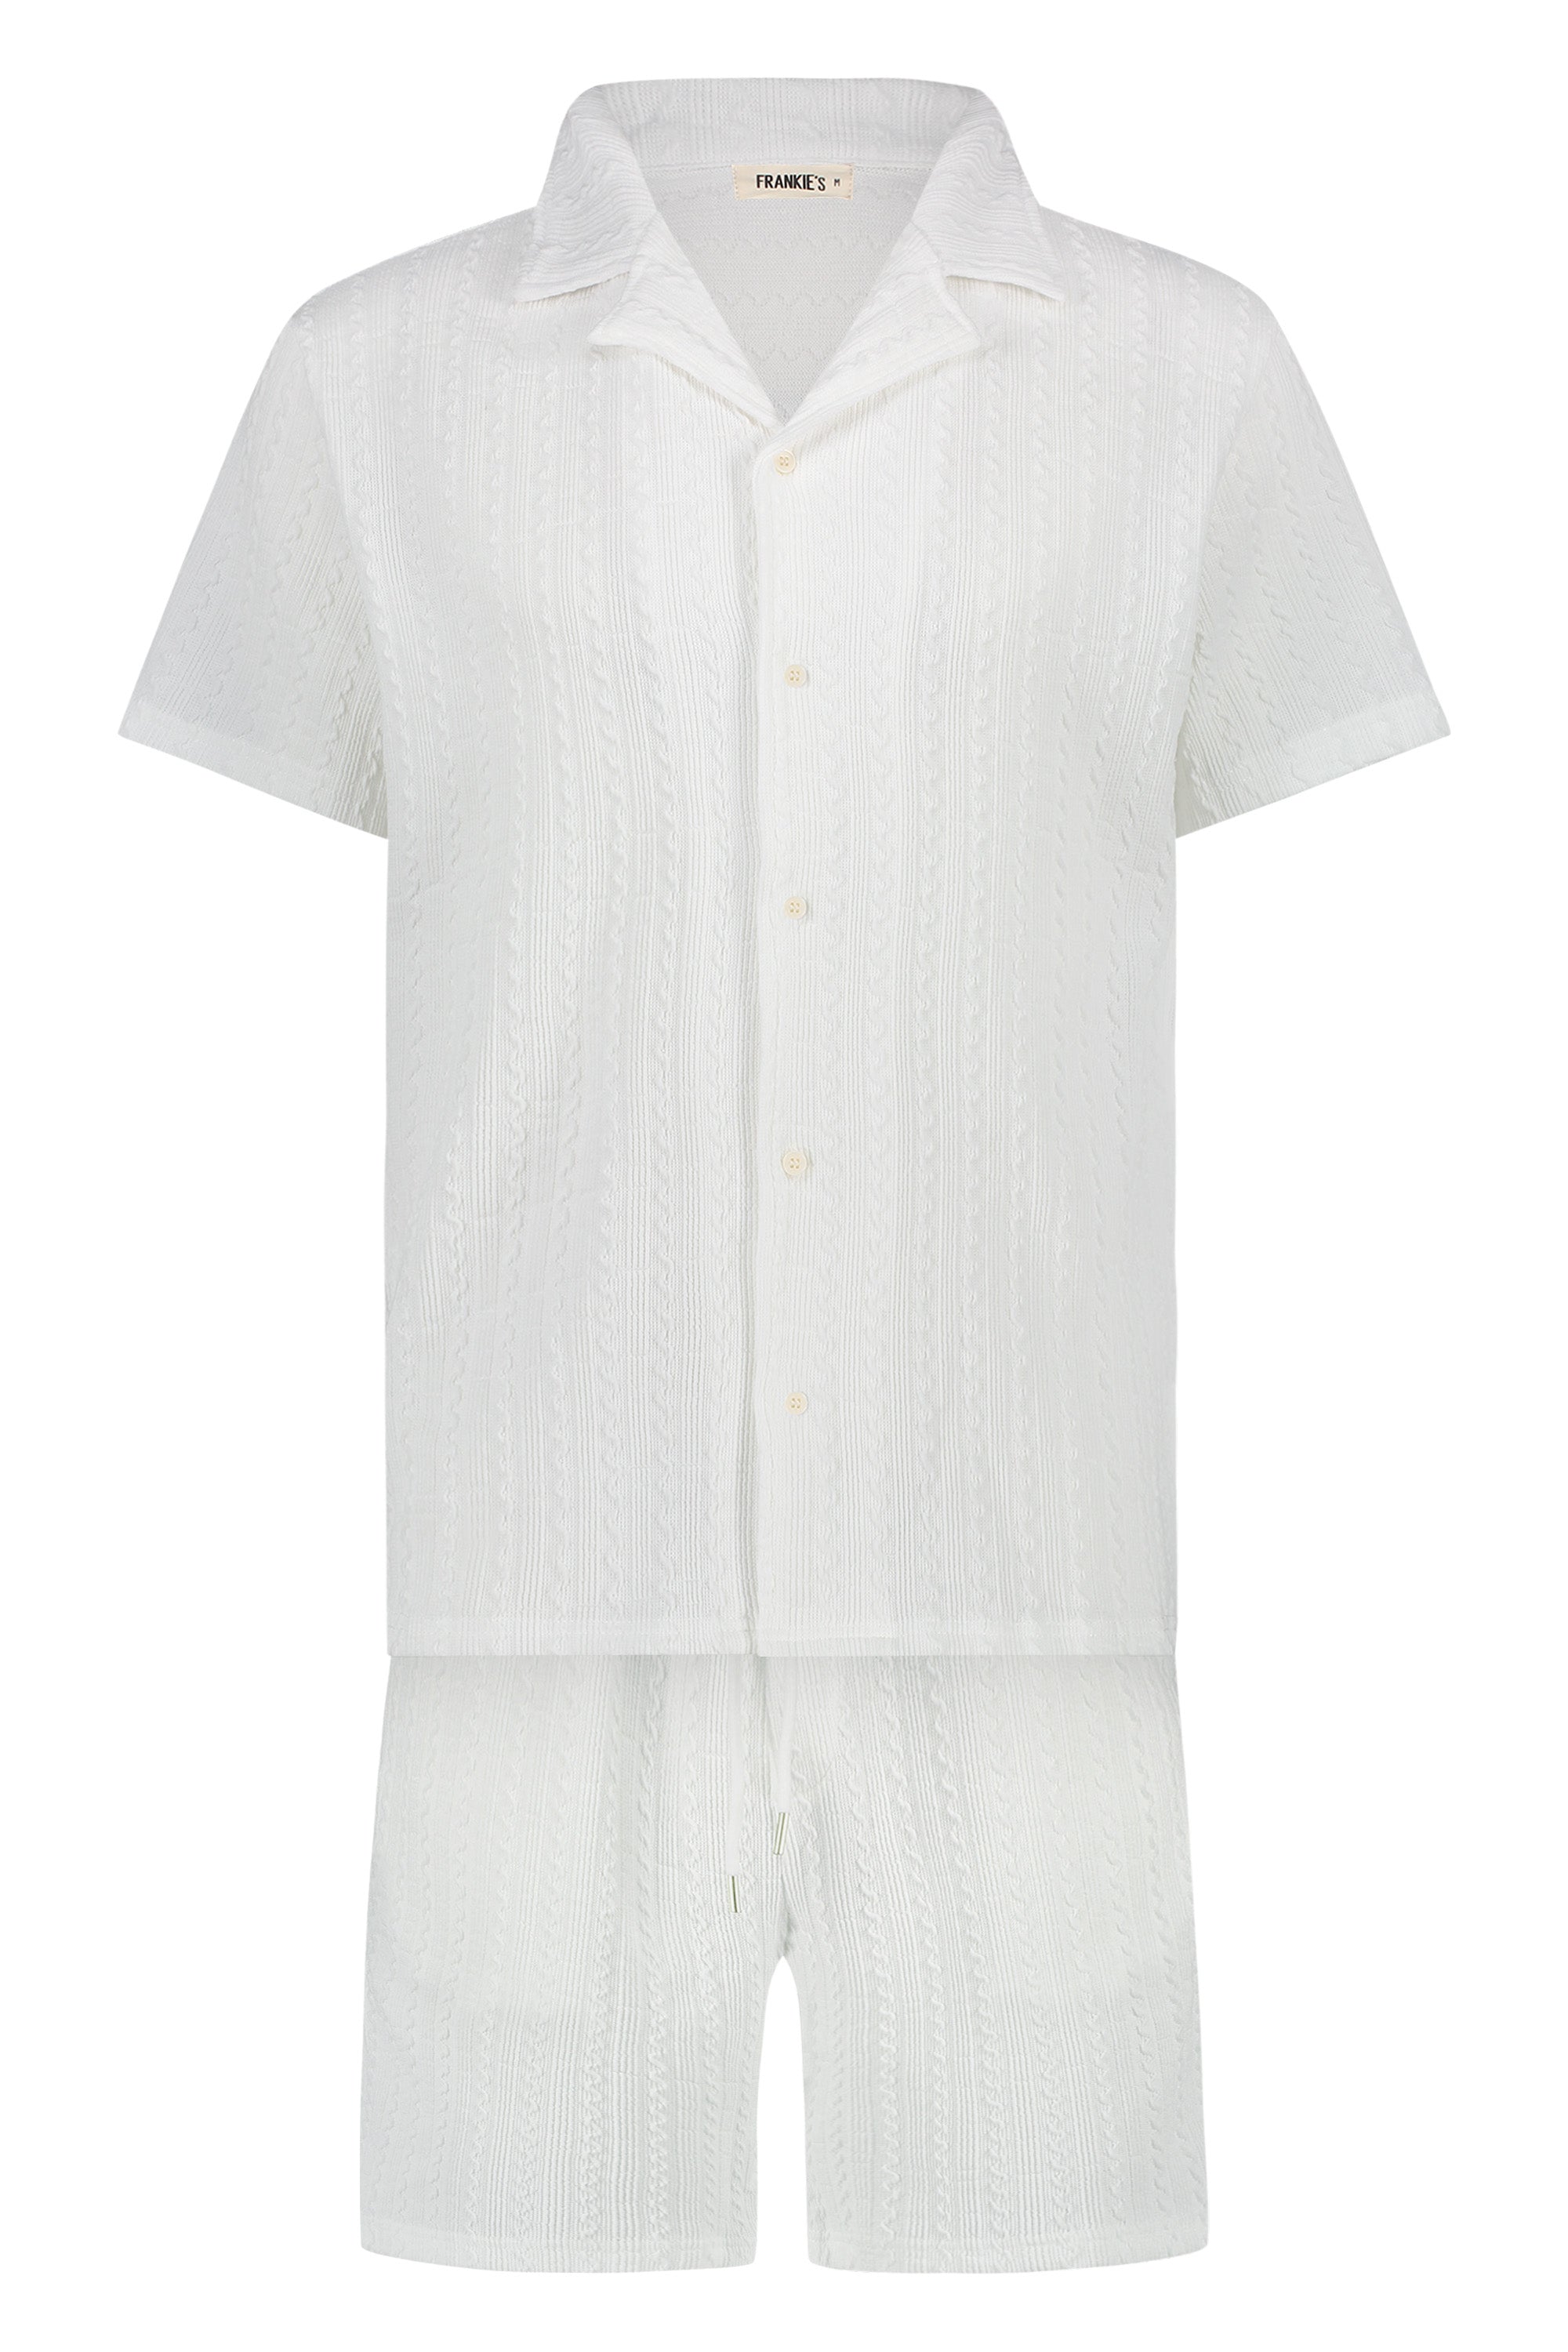 Summer set Ushuaia short & shirt white